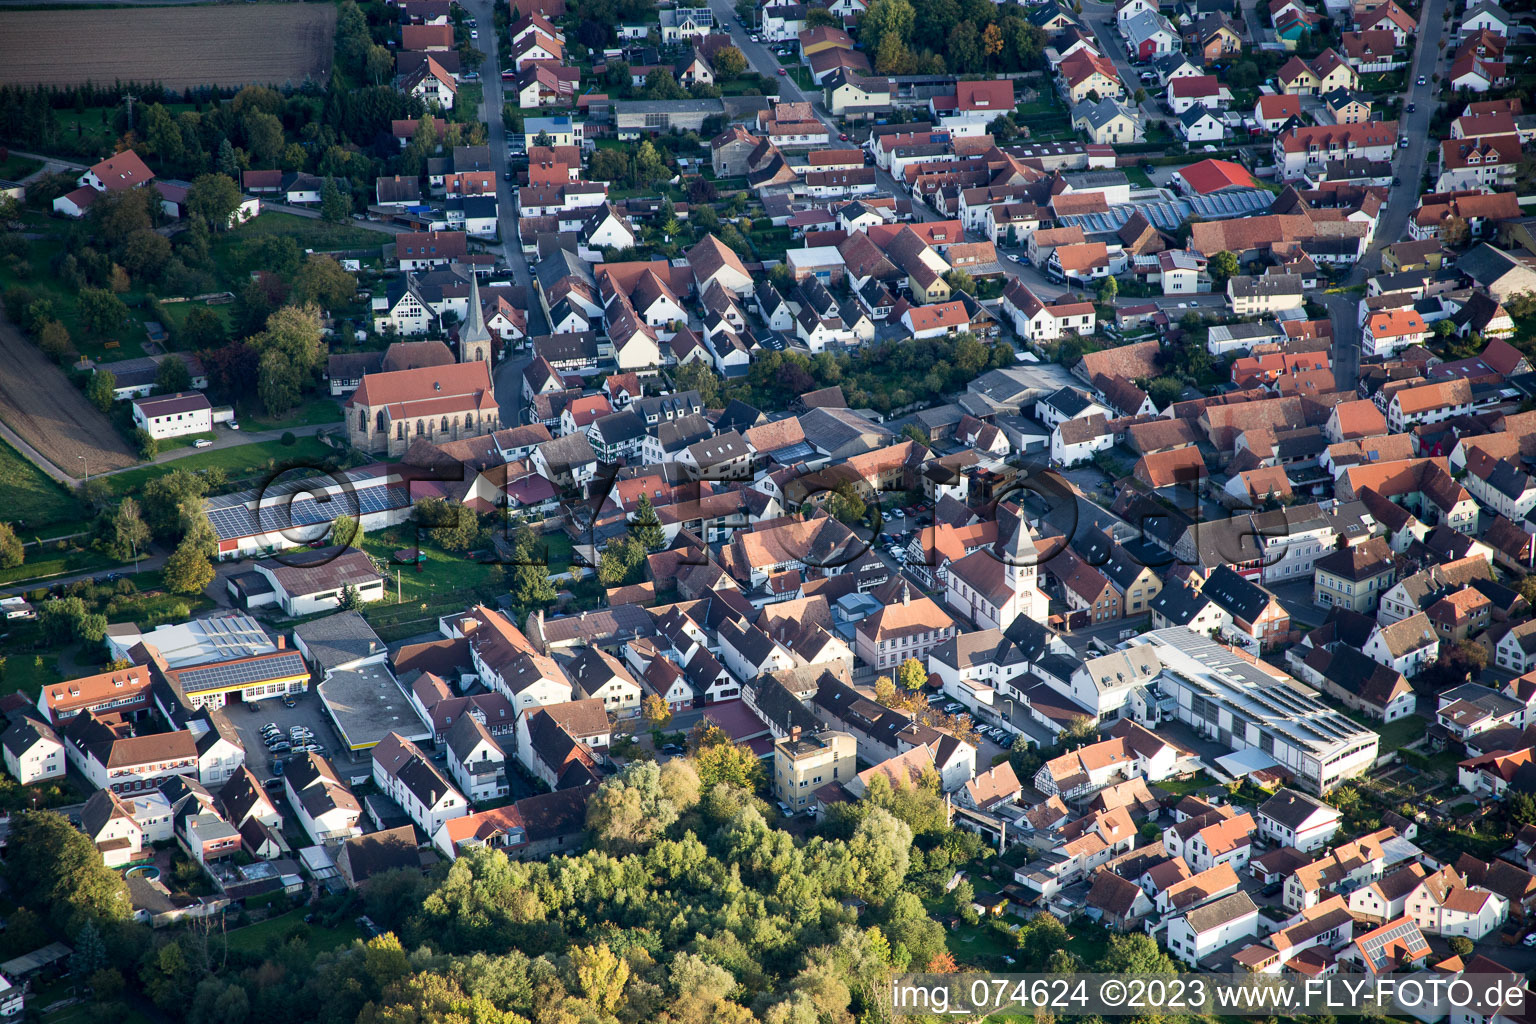 District Ingenheim in Billigheim-Ingenheim in the state Rhineland-Palatinate, Germany viewn from the air